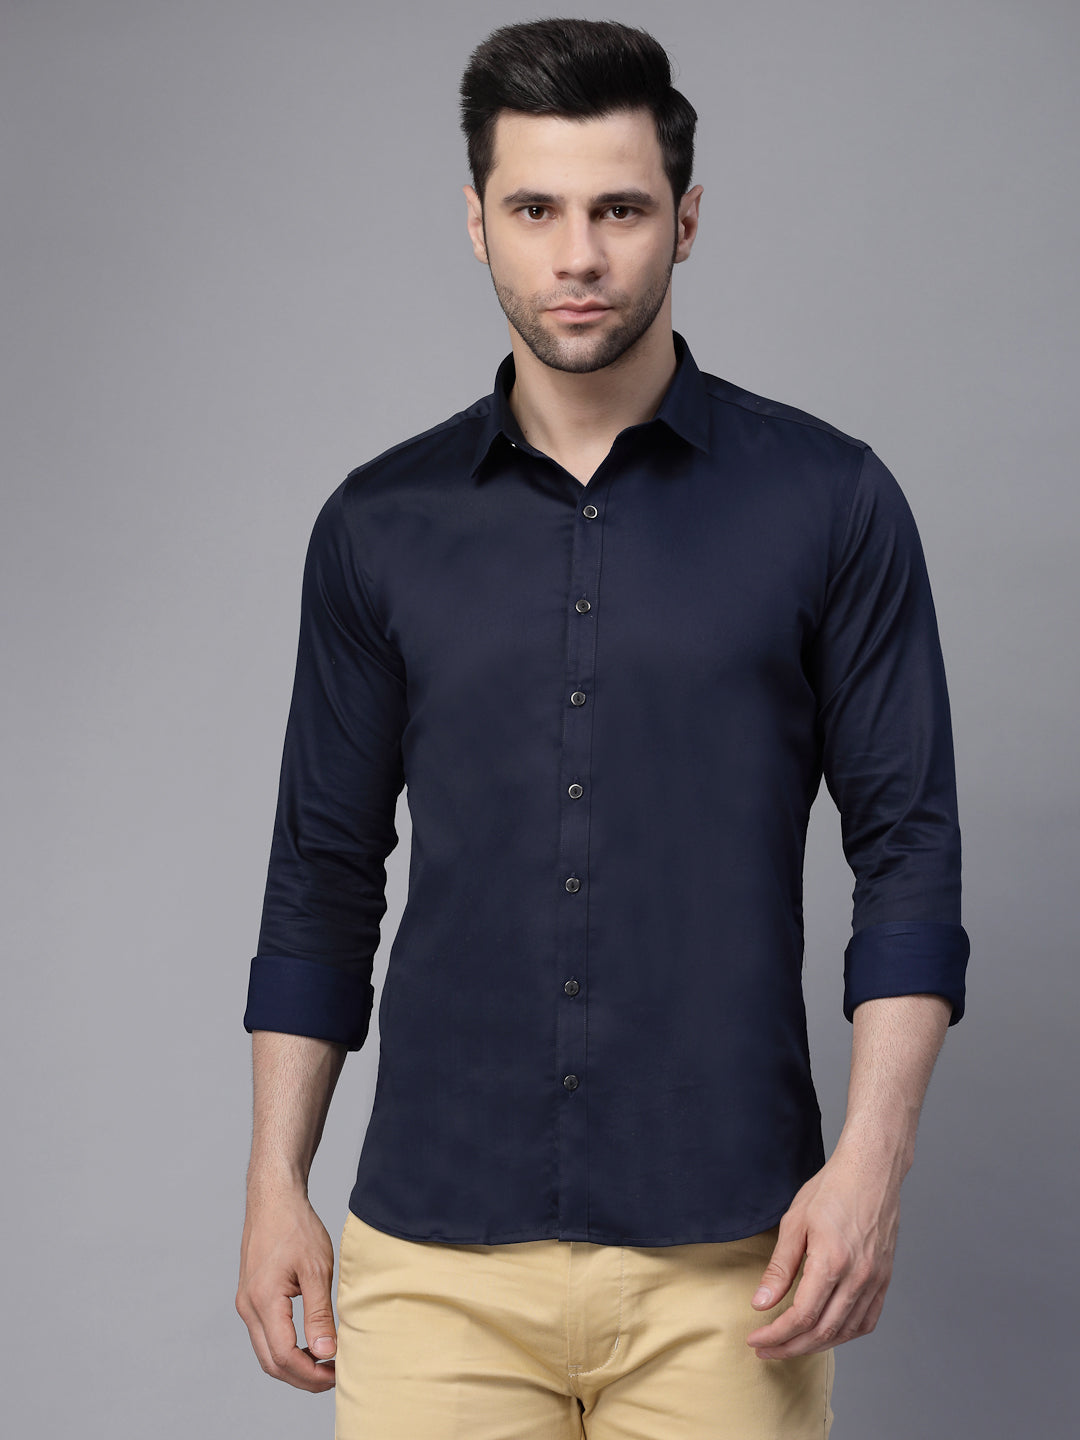 Mens Navy Blue Collar Neck Solid Shirt